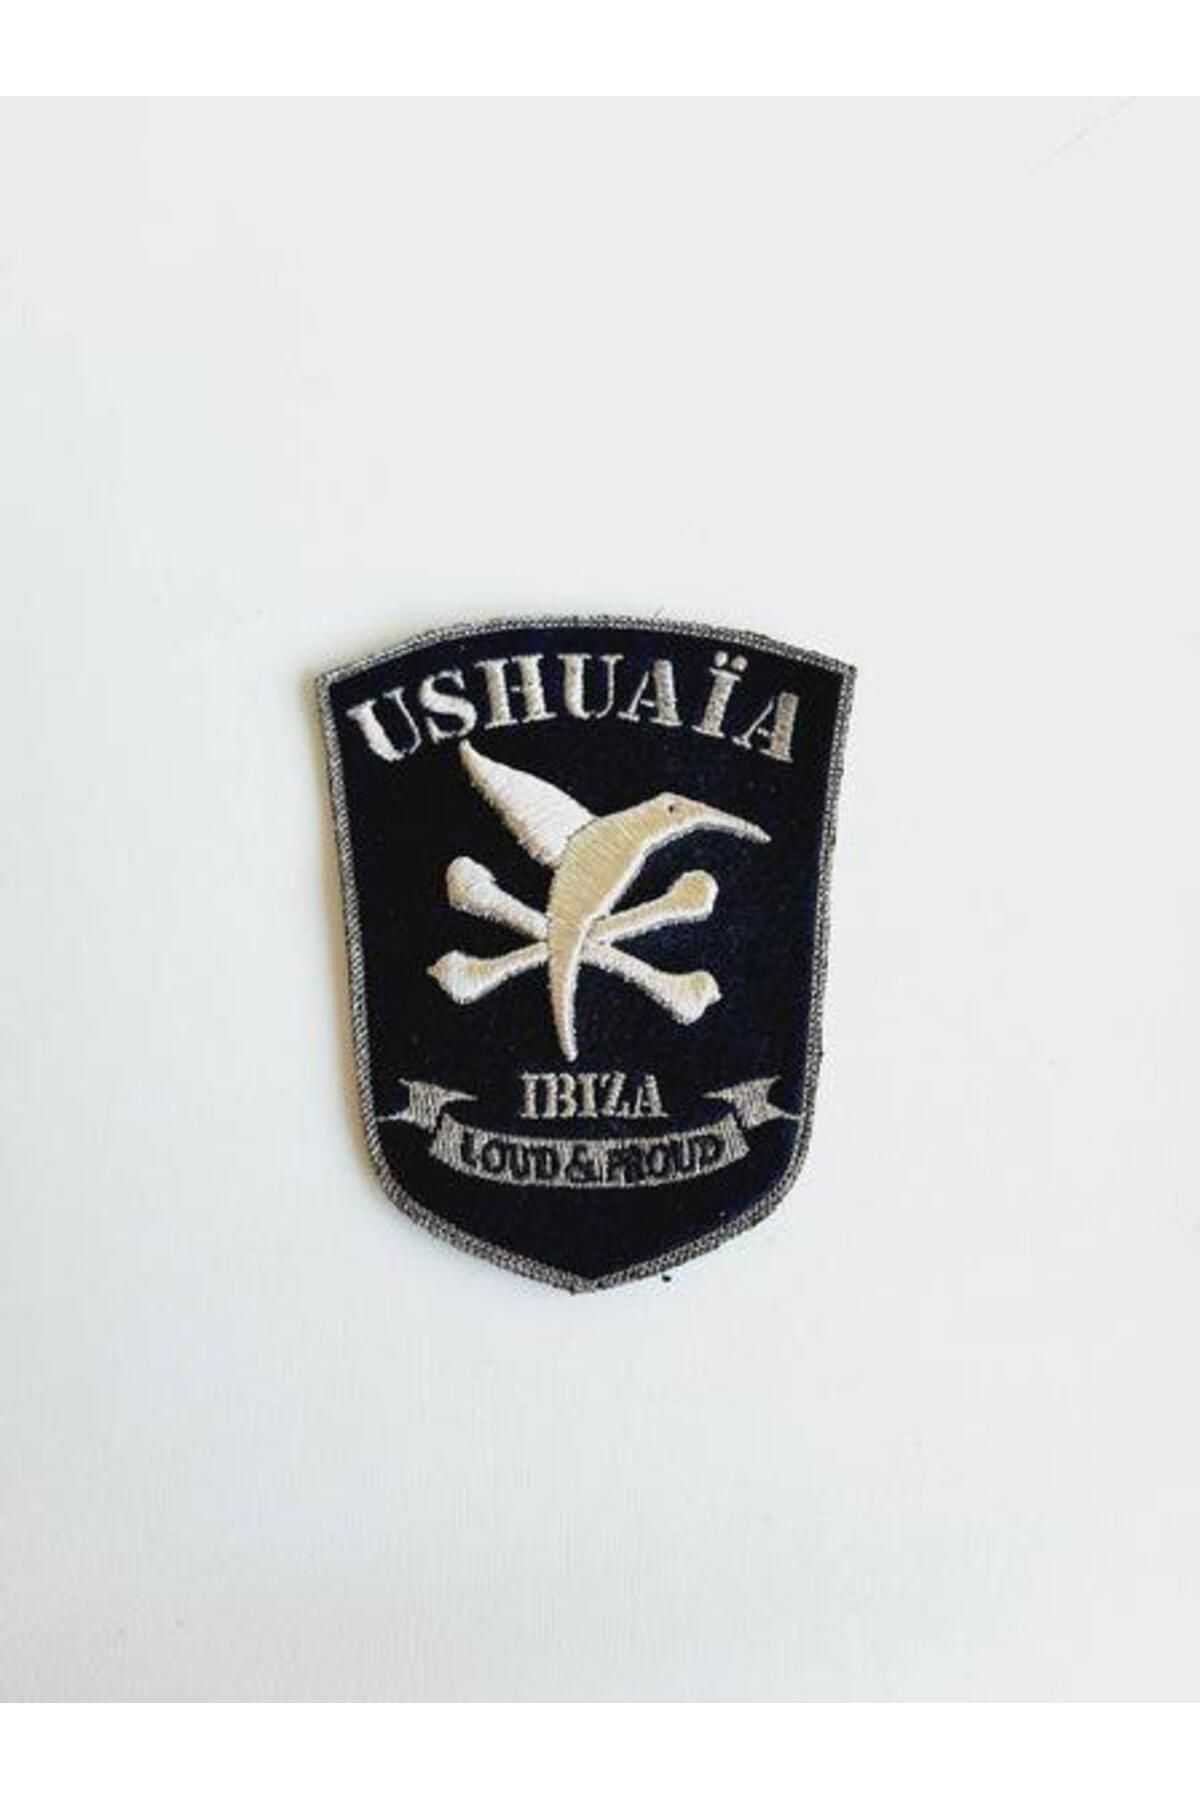 Hasyılmaz Ushuaia Ibiza Logo Arma Apolet 1 Adet